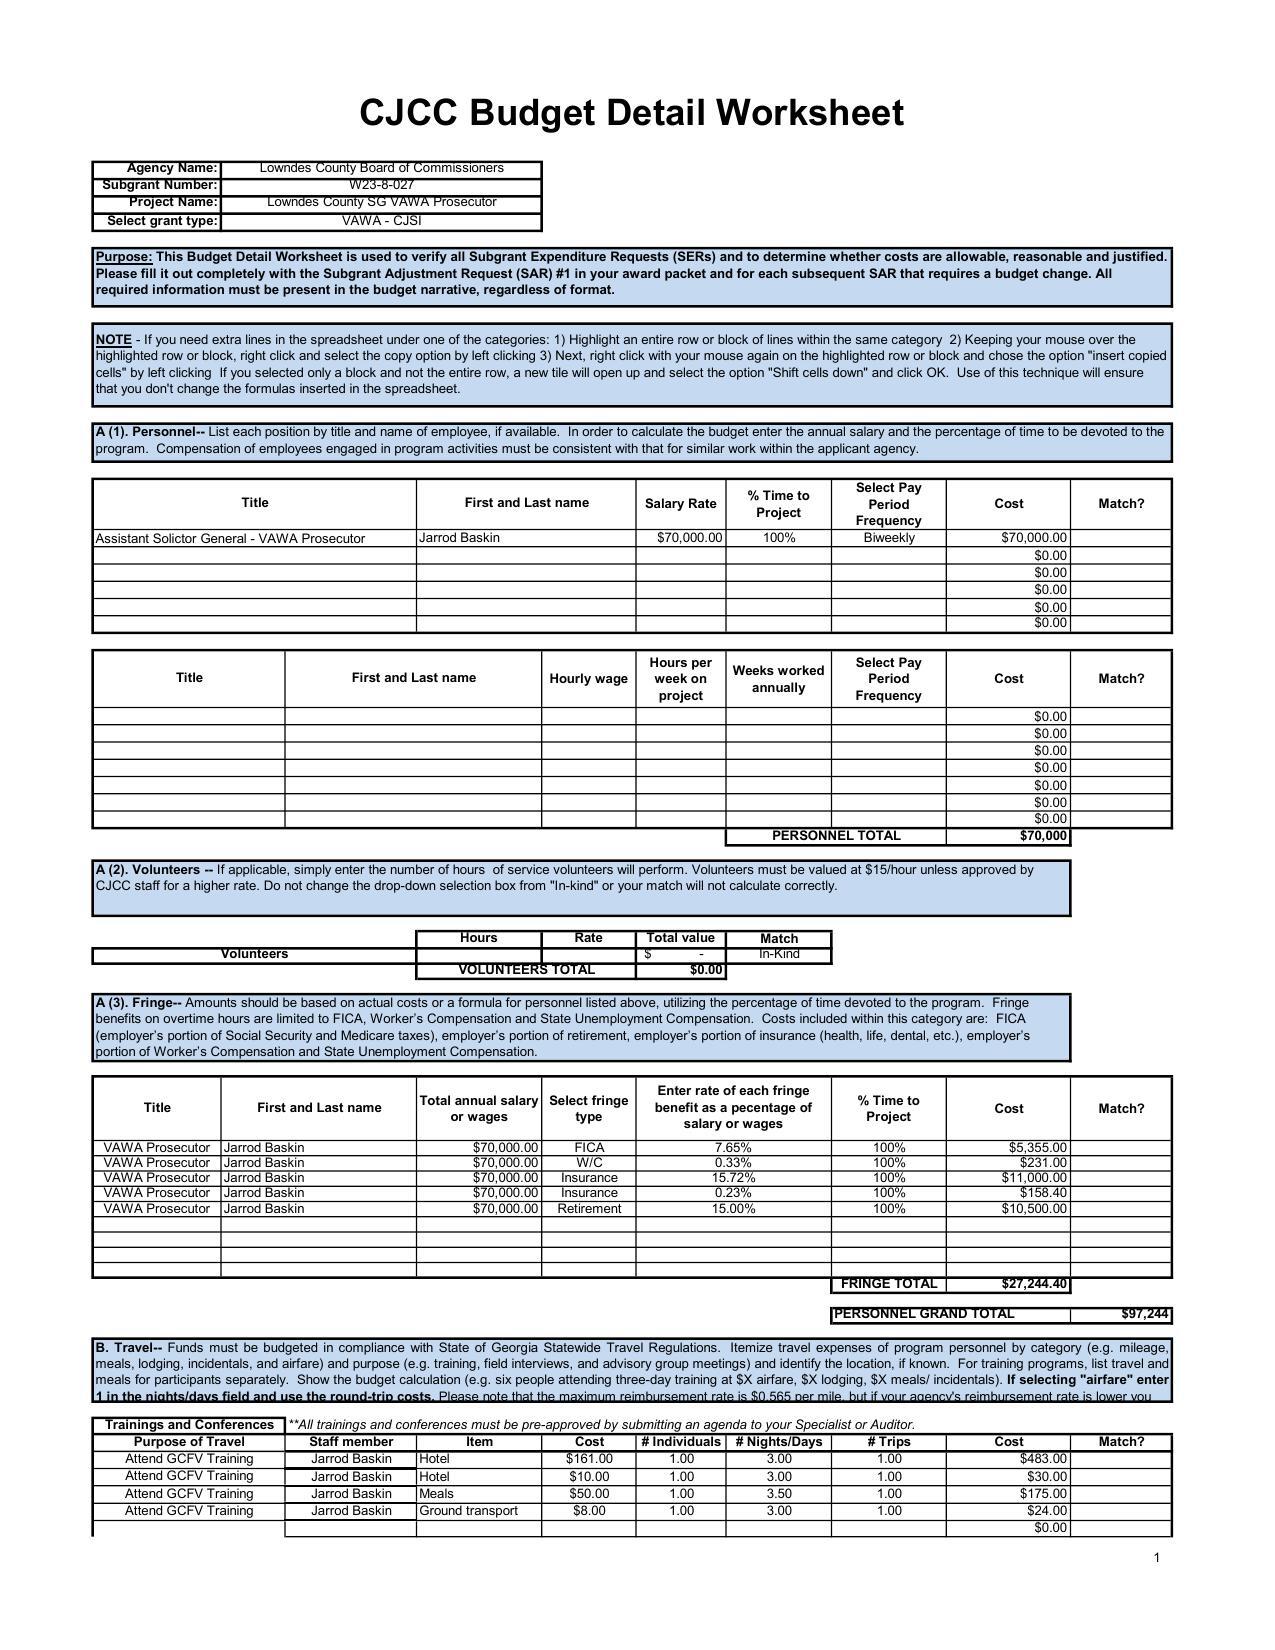 CJCC Budget Detail Worksheet